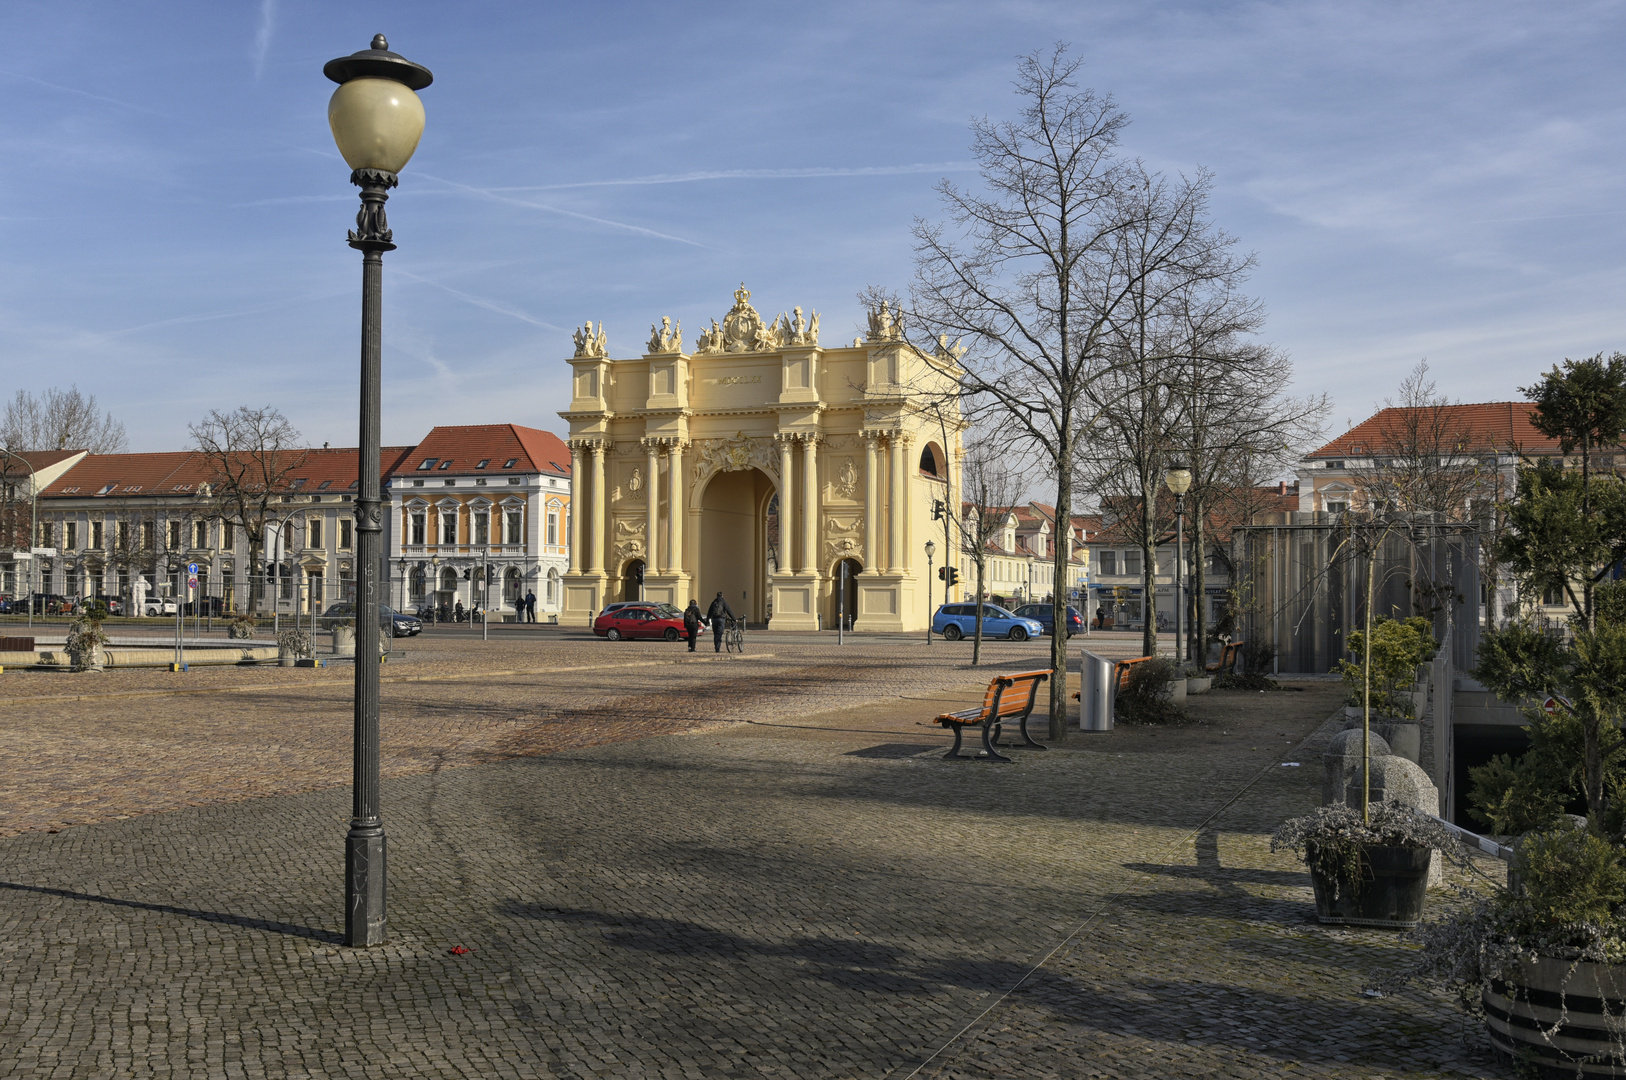  Potsdam